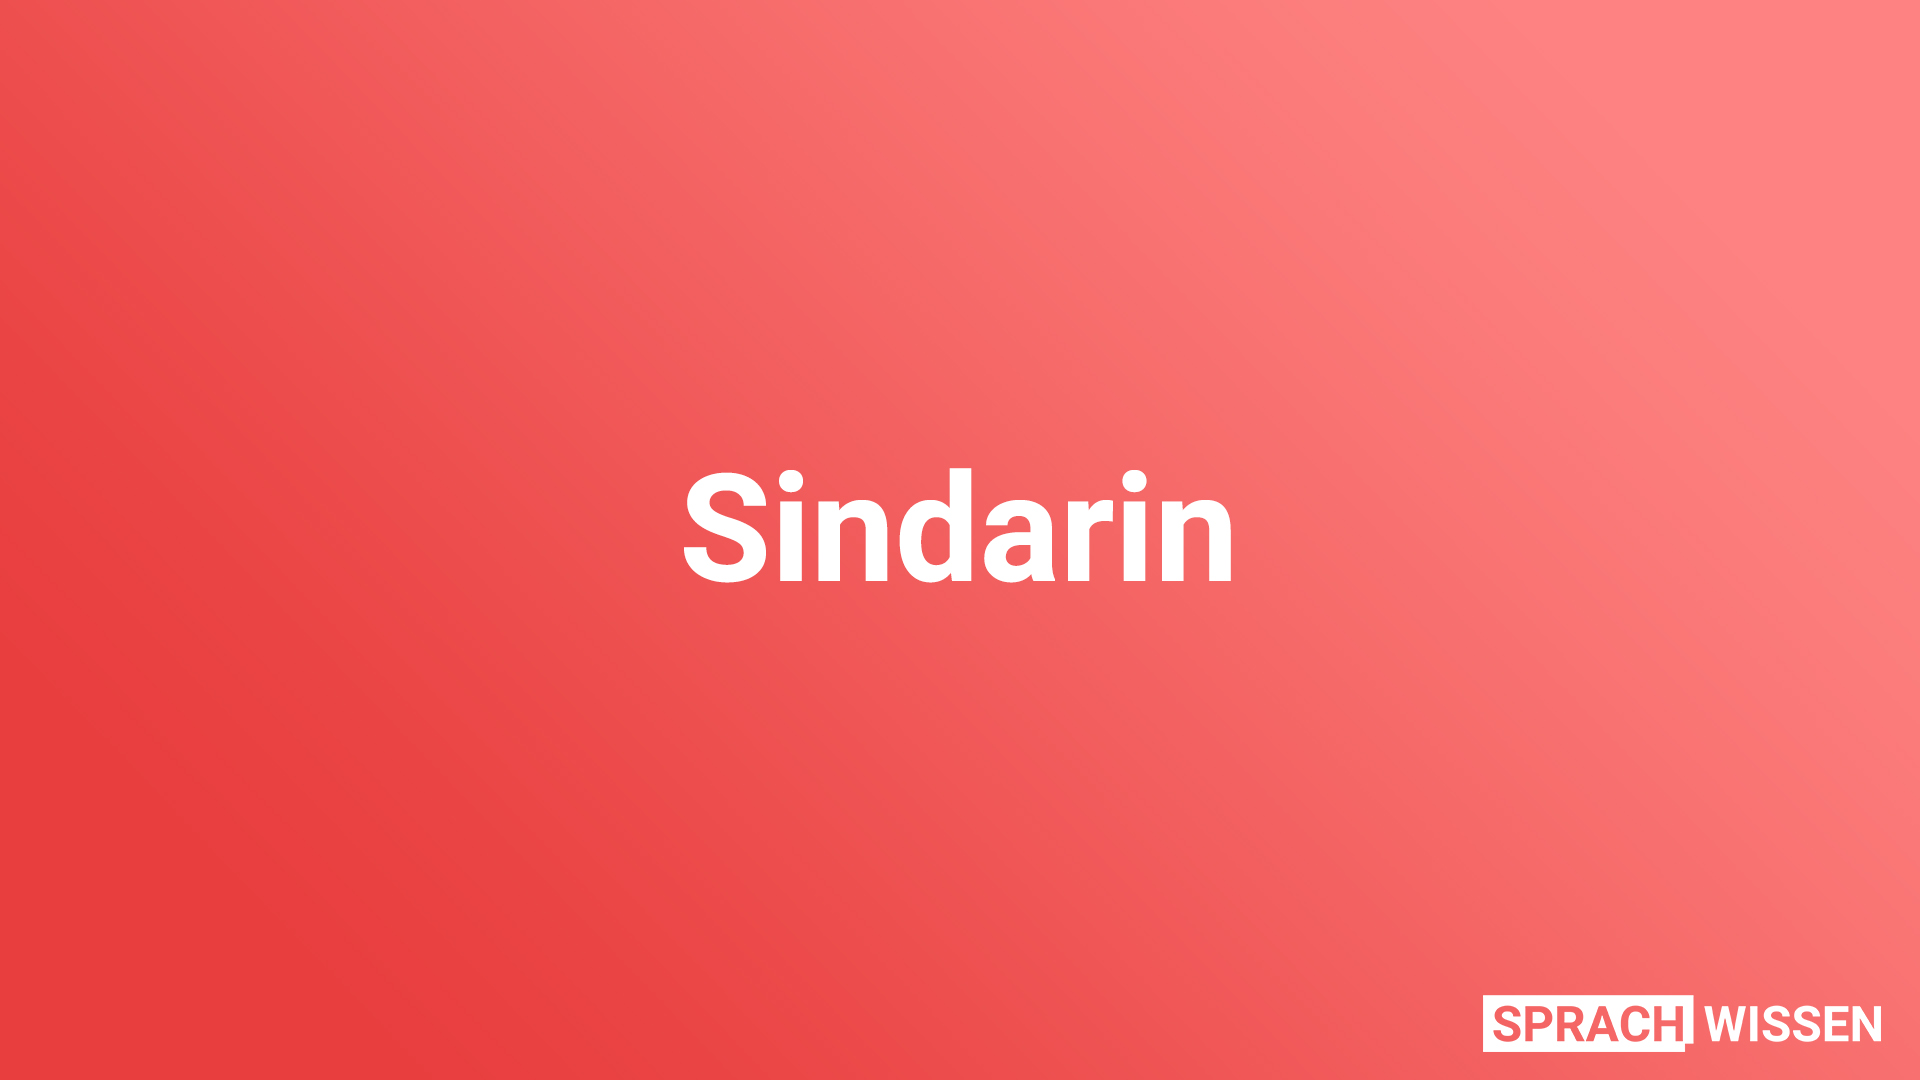 Sindarin